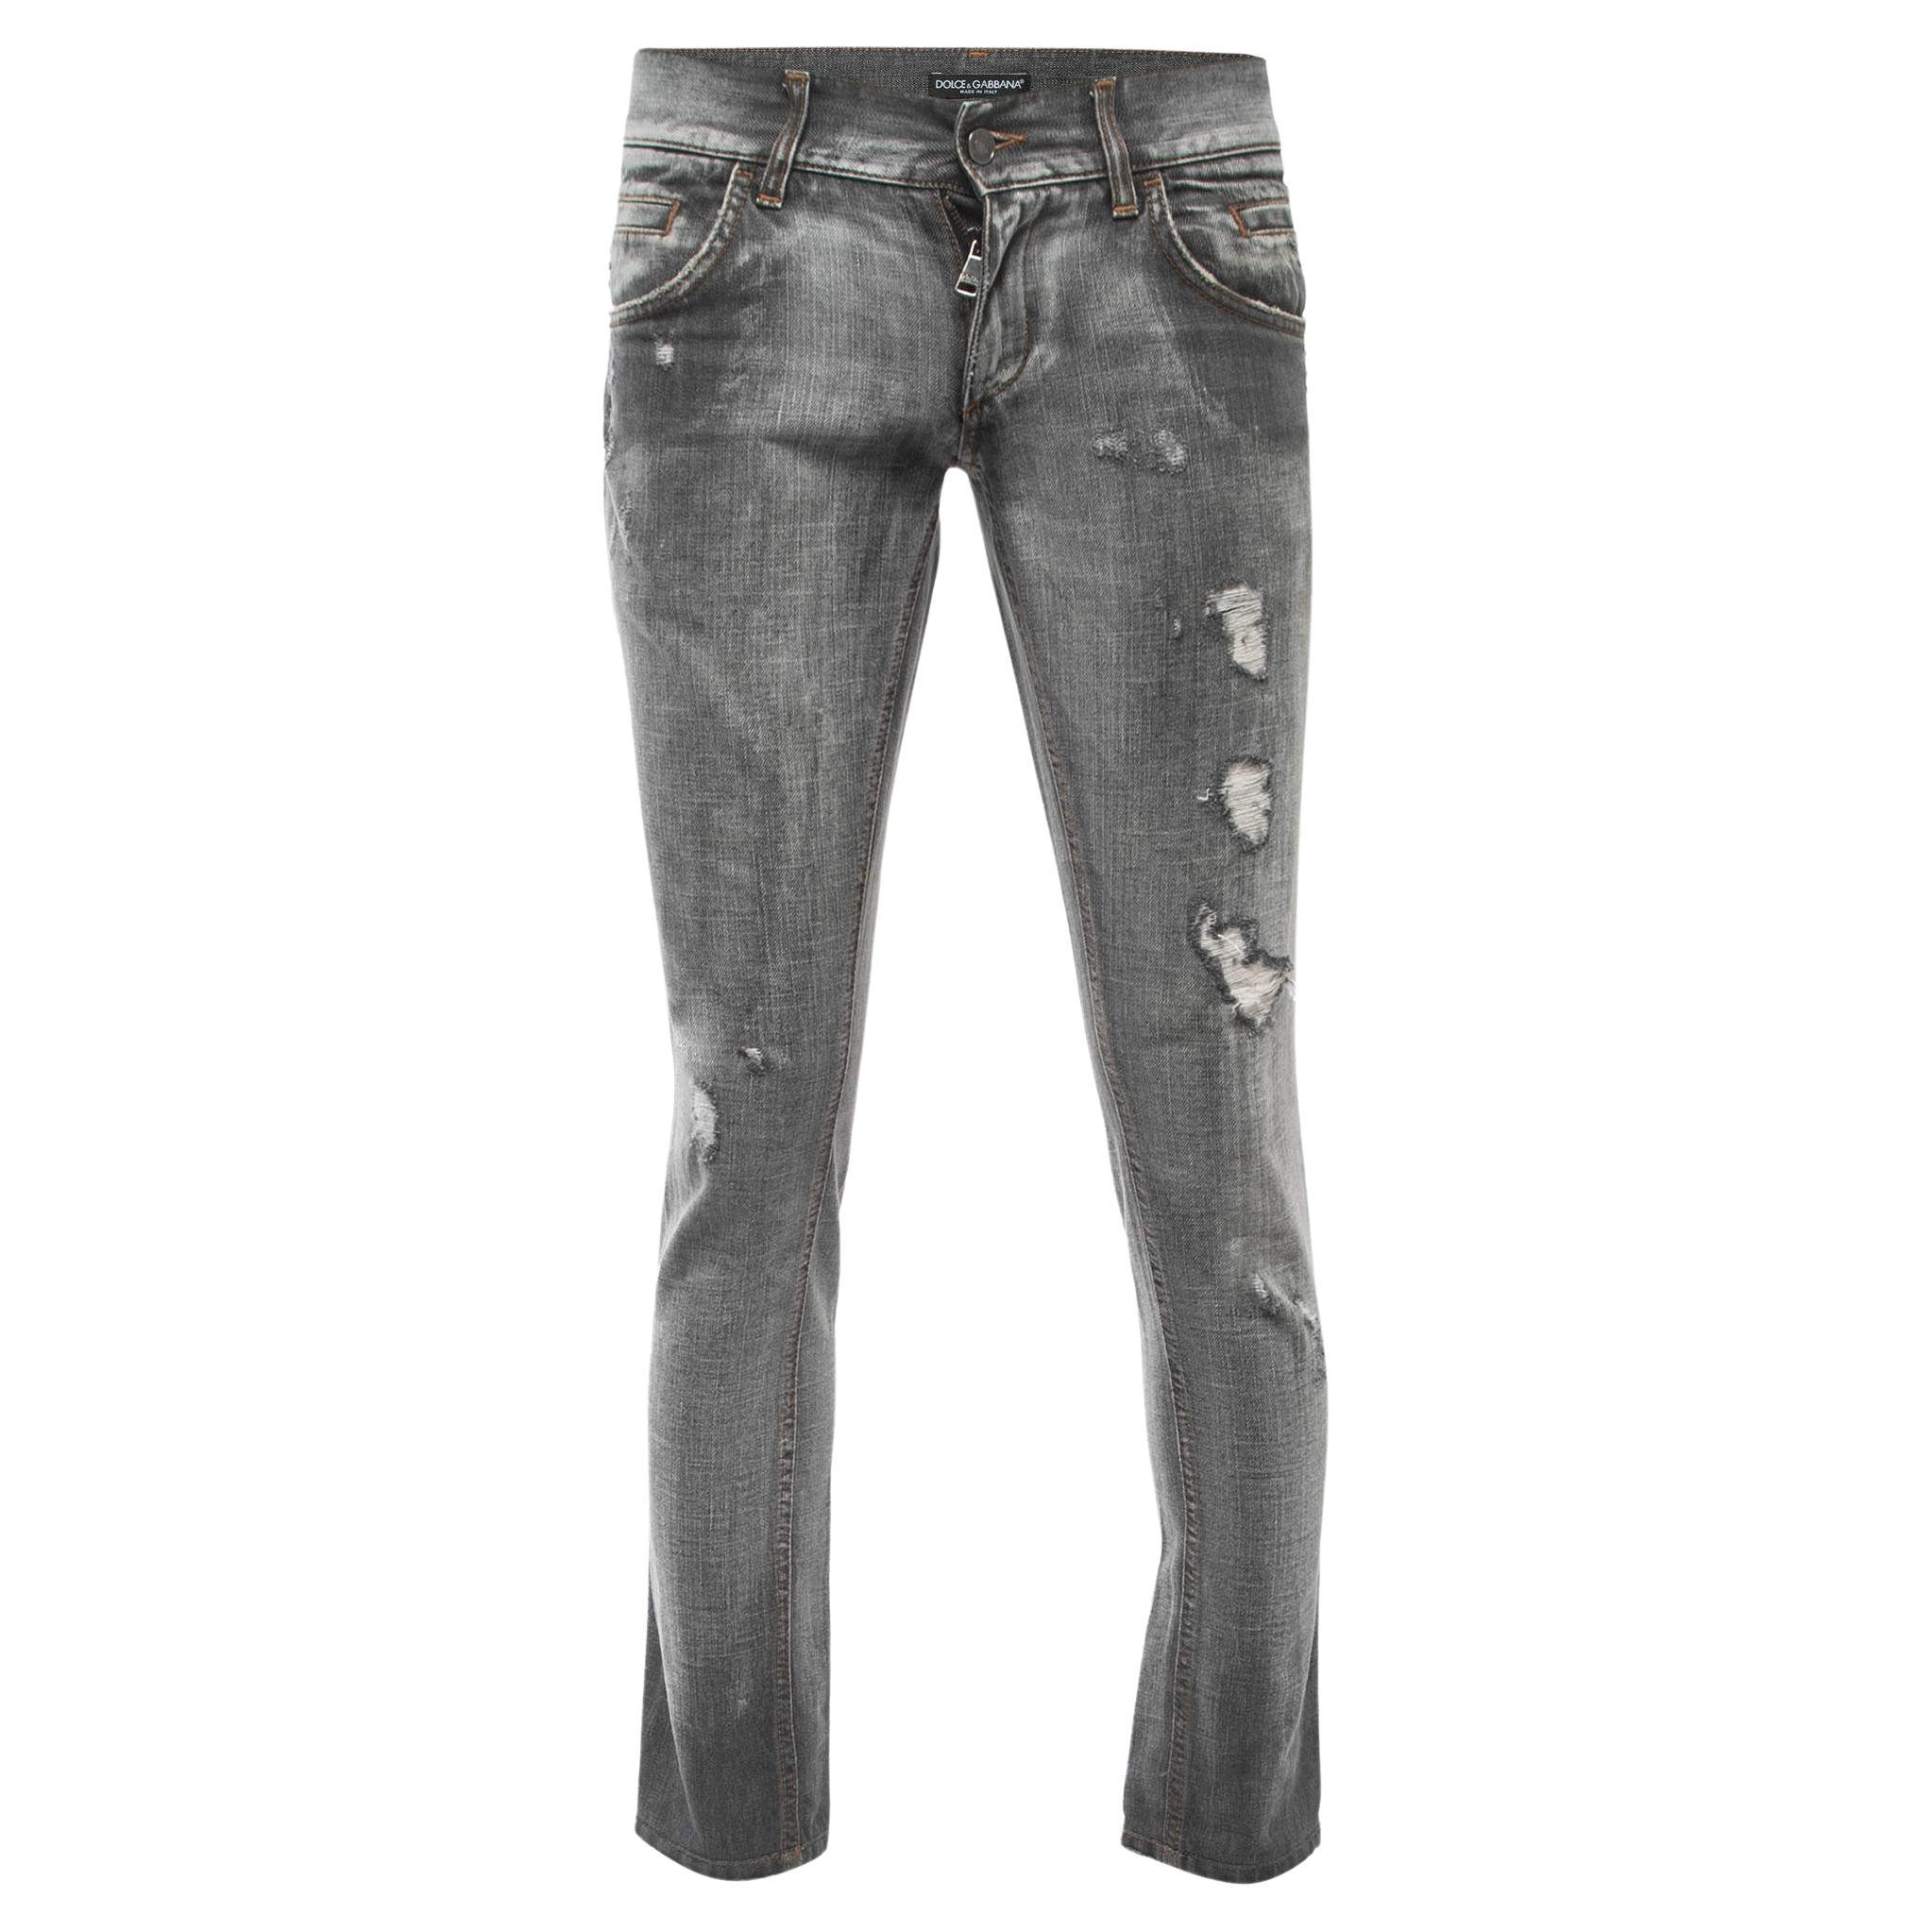 Dolce & Gabbana Grey Washed & Distressed Denim Jeans L Waist 32"